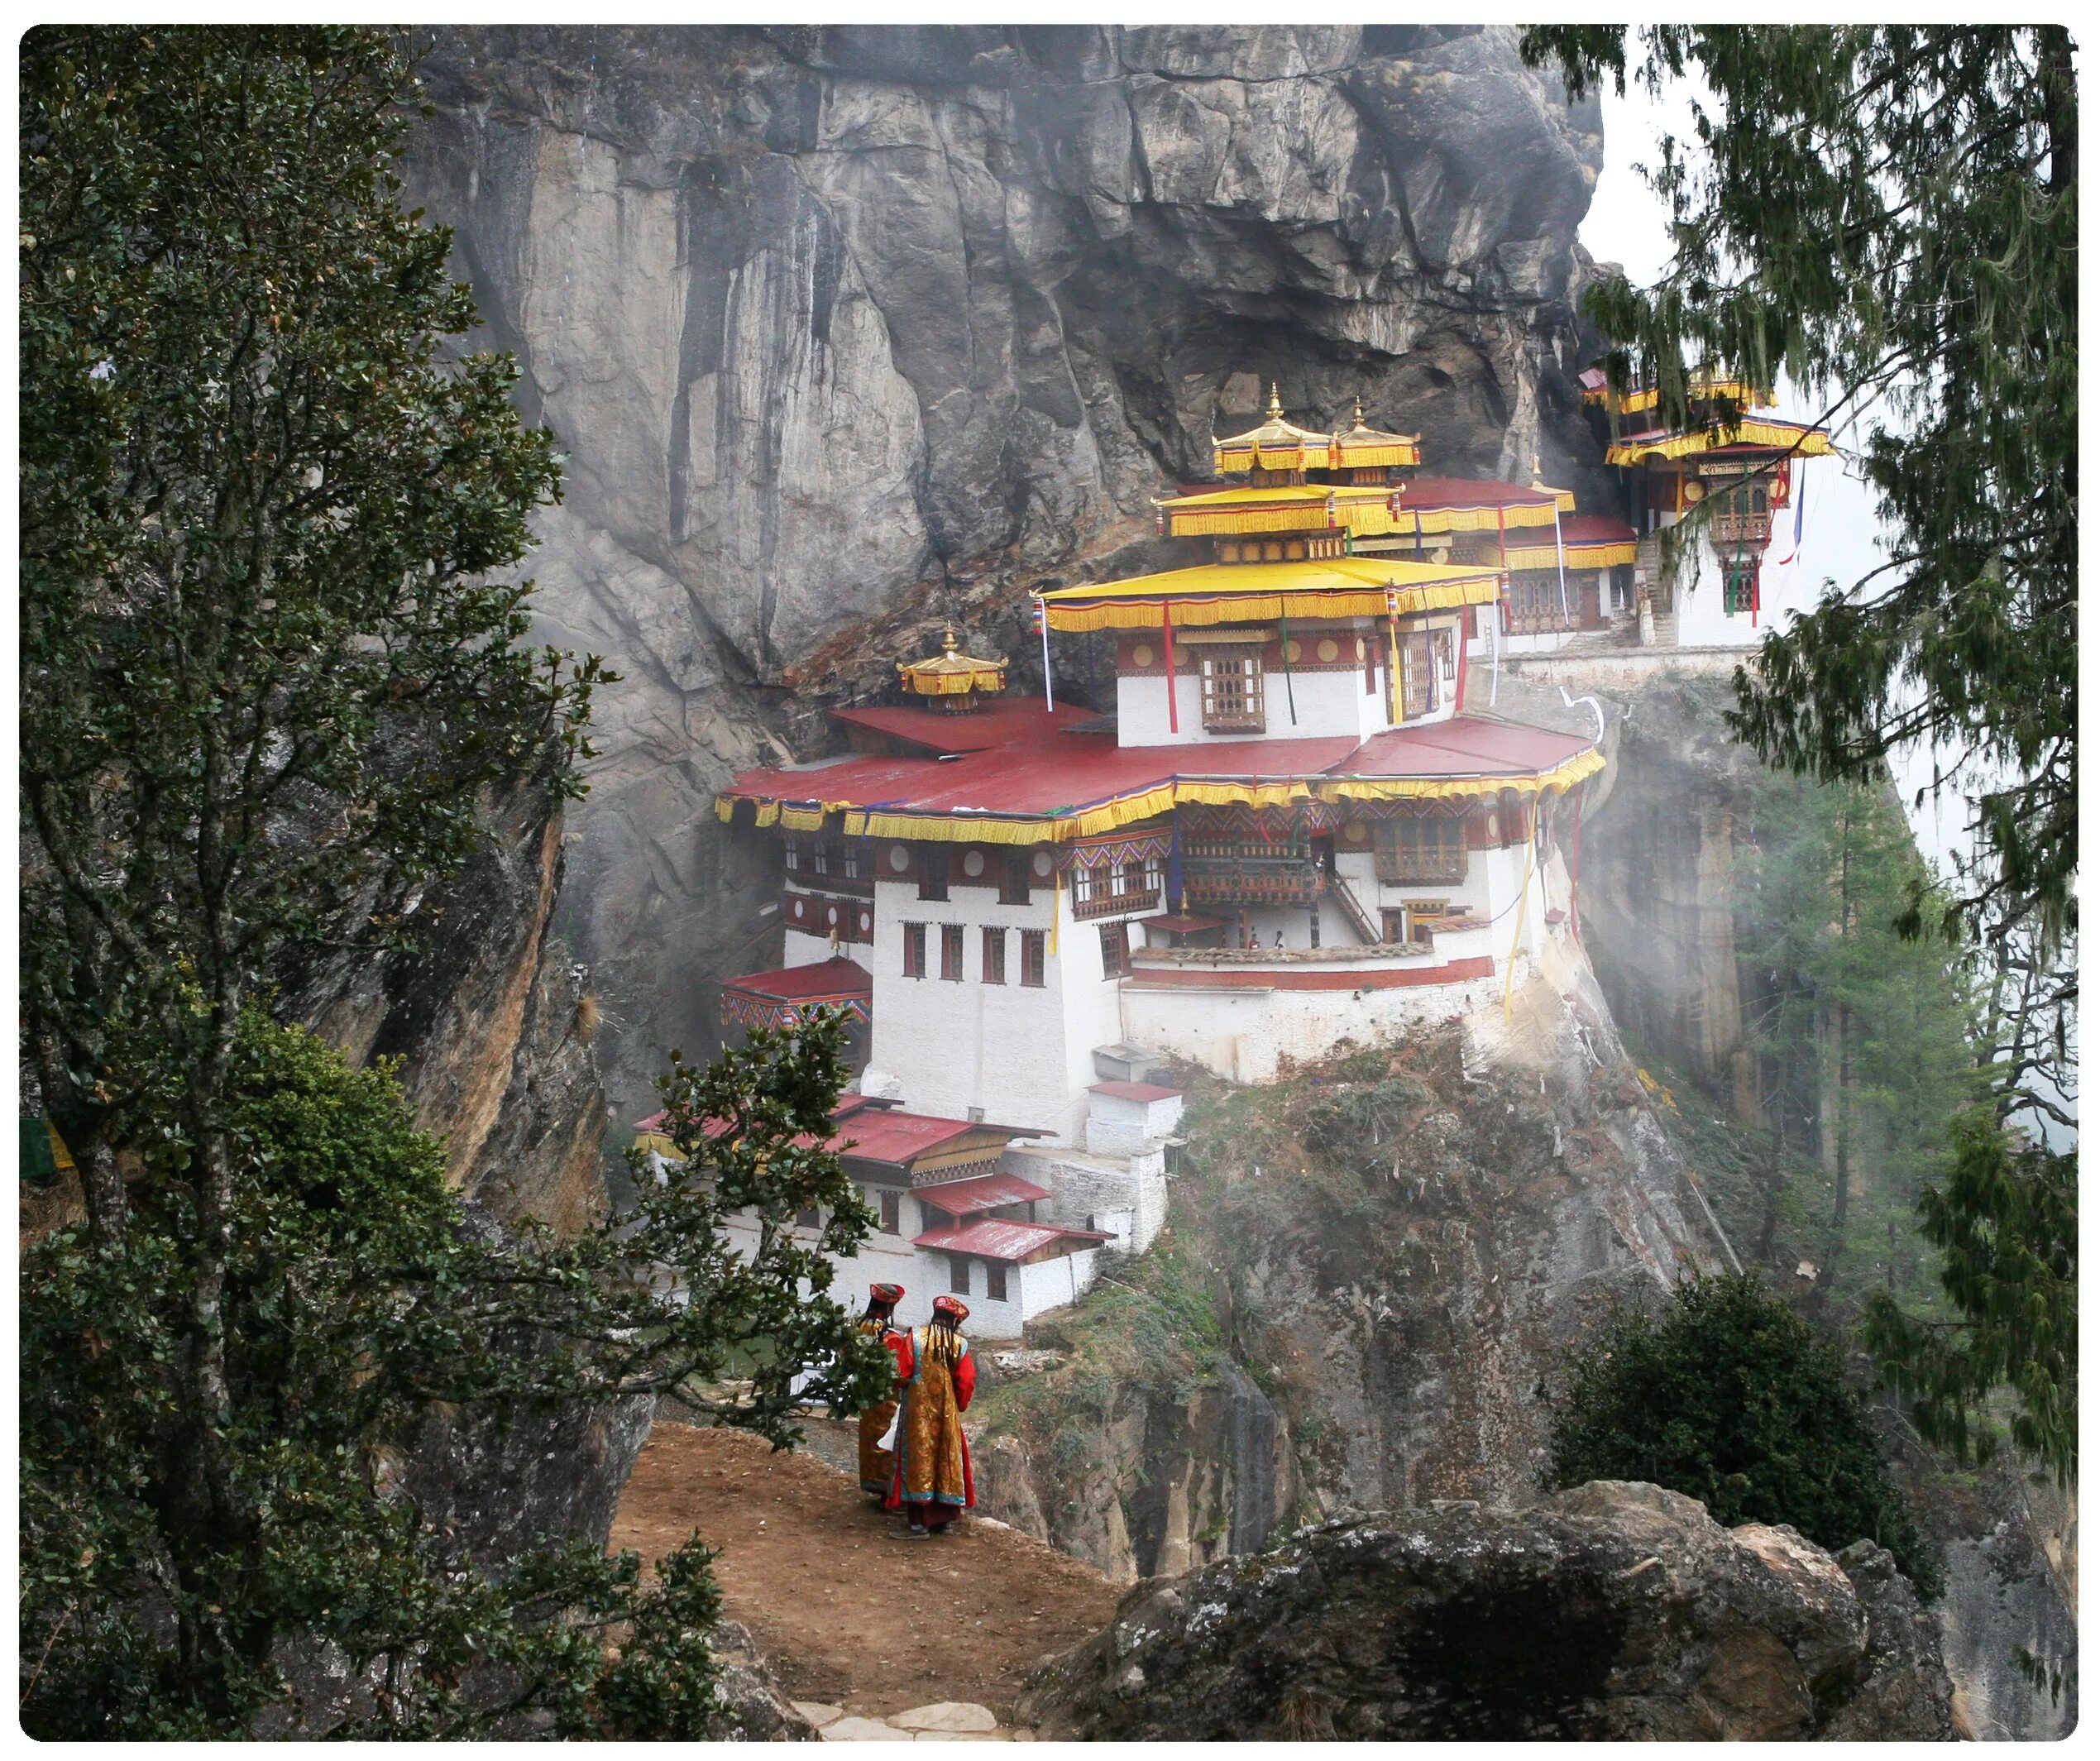 Монастырь Таксанг, бутан. Лакханг бутан. Такцанг-лакханг бутан. Монастырь Такцанг-лакханг внутри. Бутан вопрос